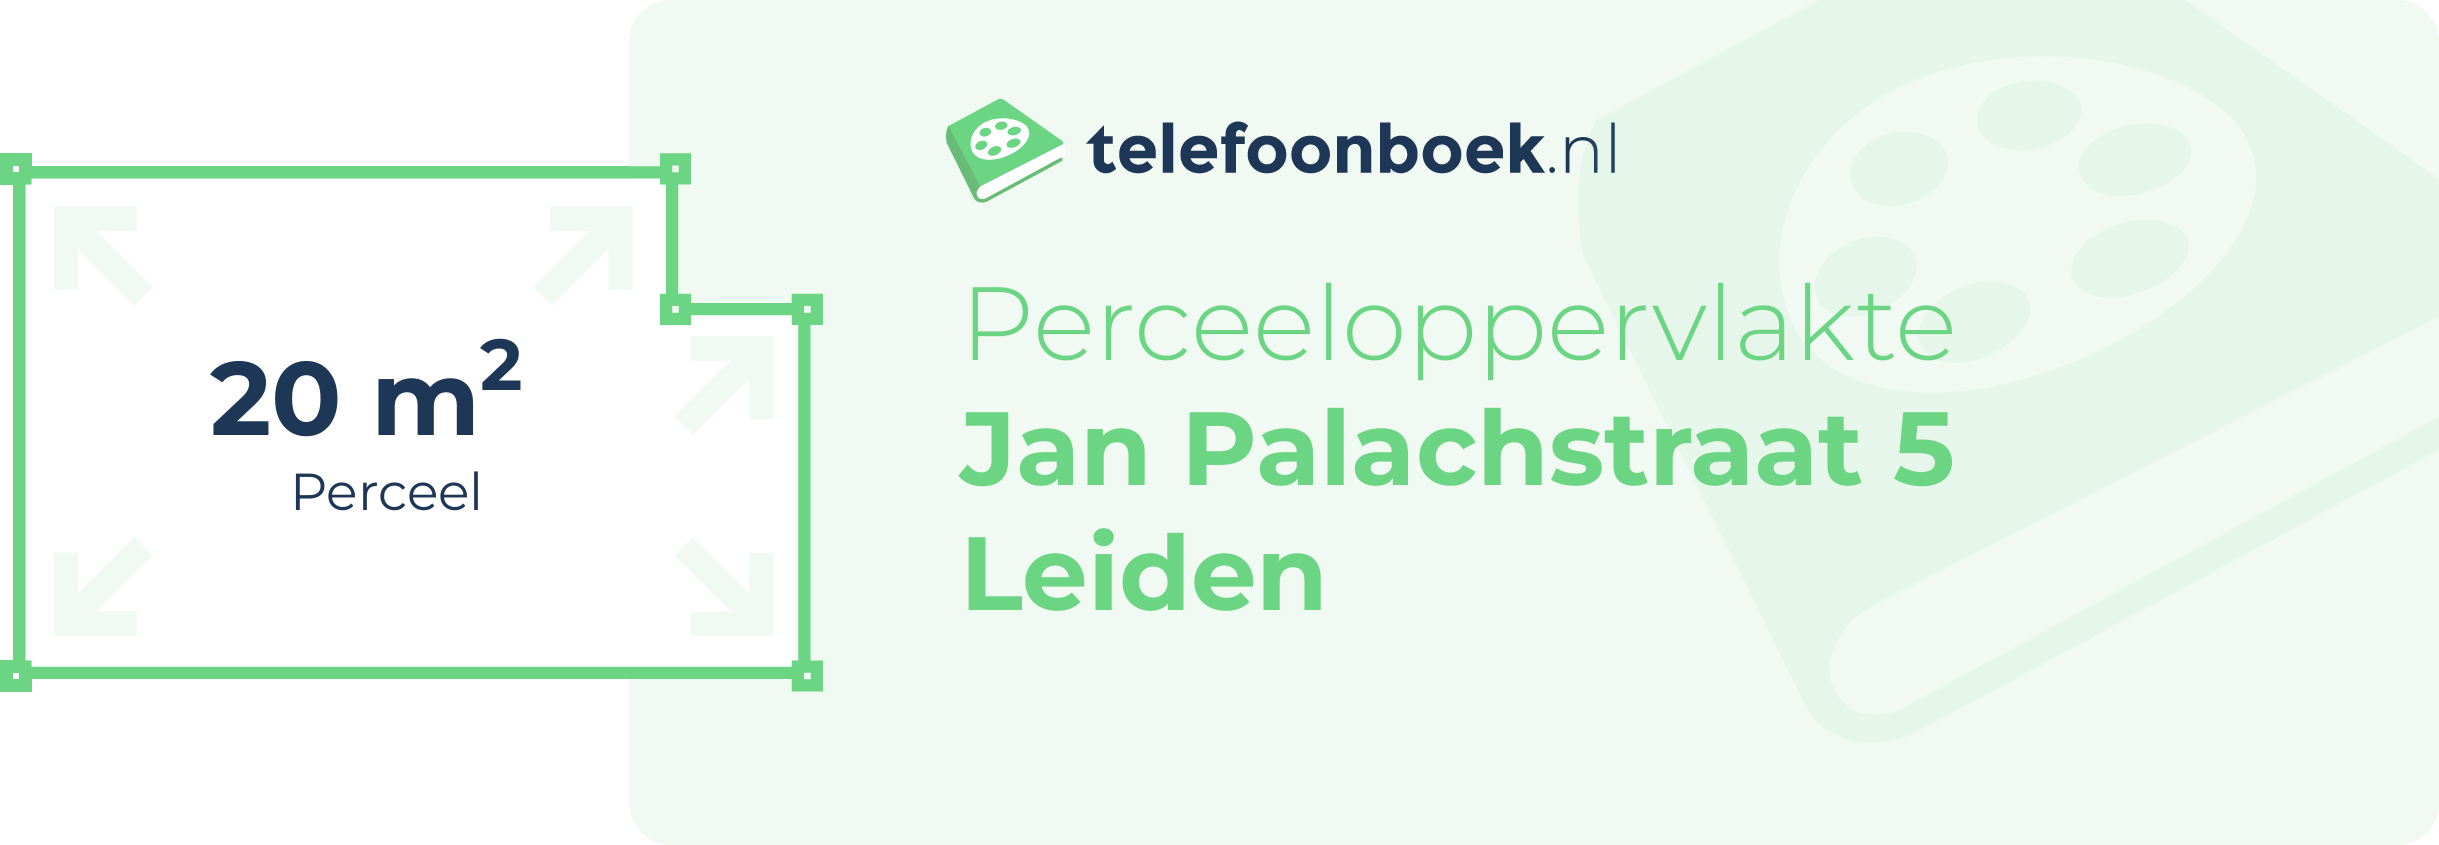 Perceeloppervlakte Jan Palachstraat 5 Leiden